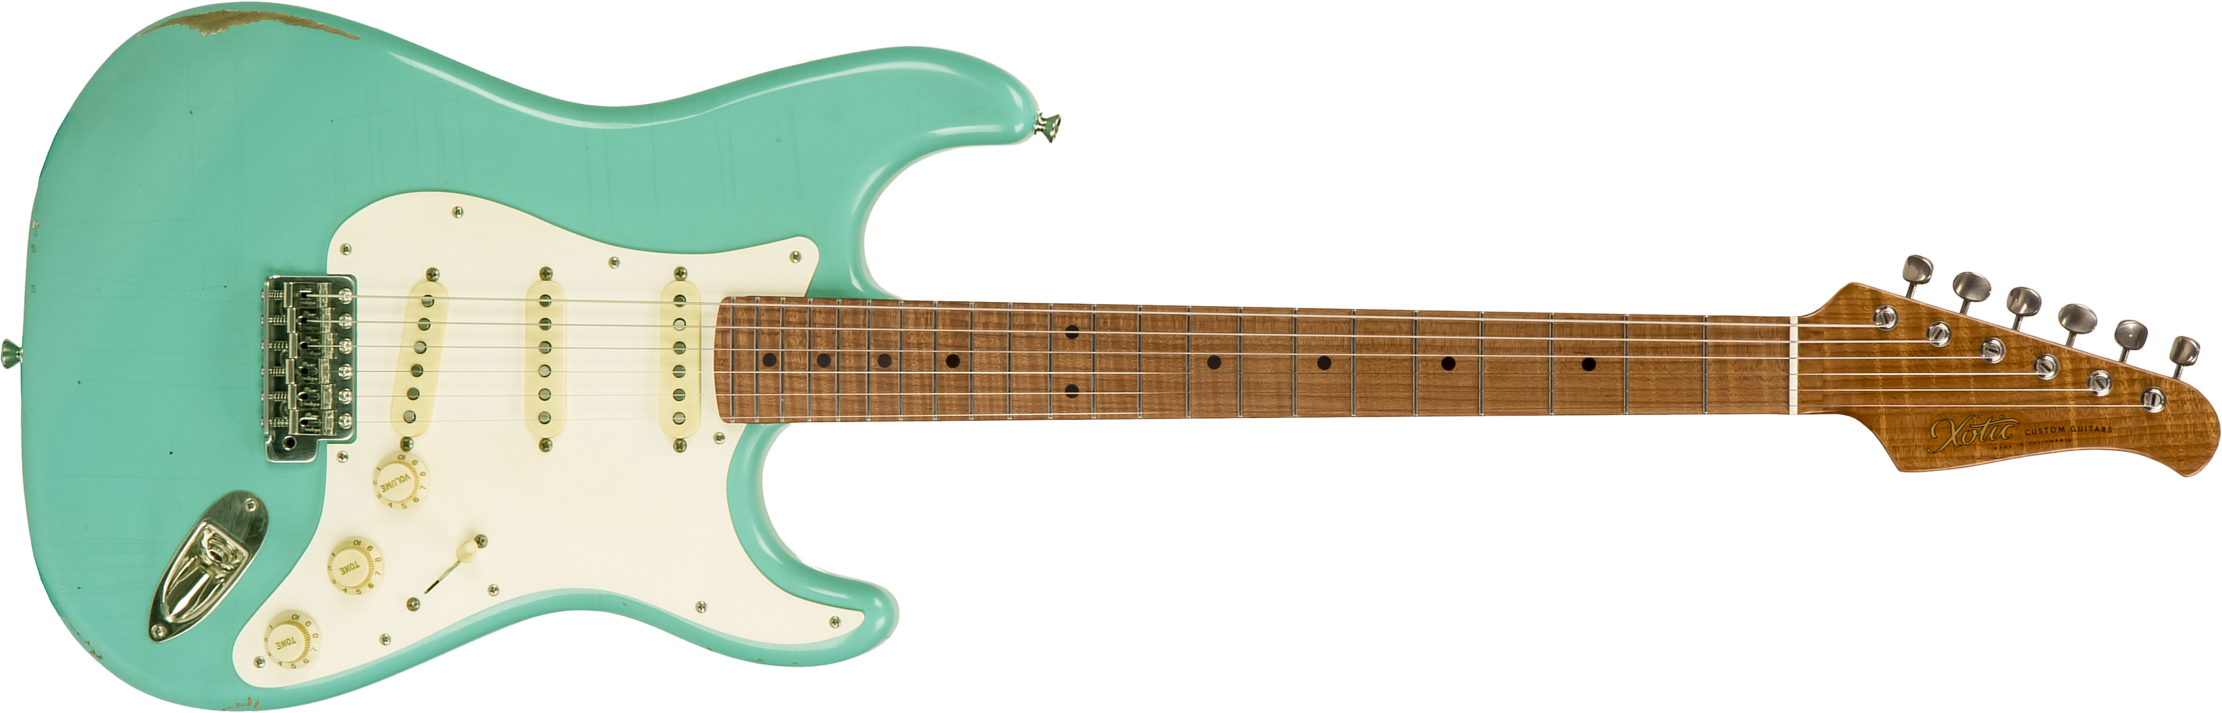 Xotic Xsc-1 Alder California Classic 3s Mn - Medium Aging Seafoam Green - Str shape electric guitar - Main picture